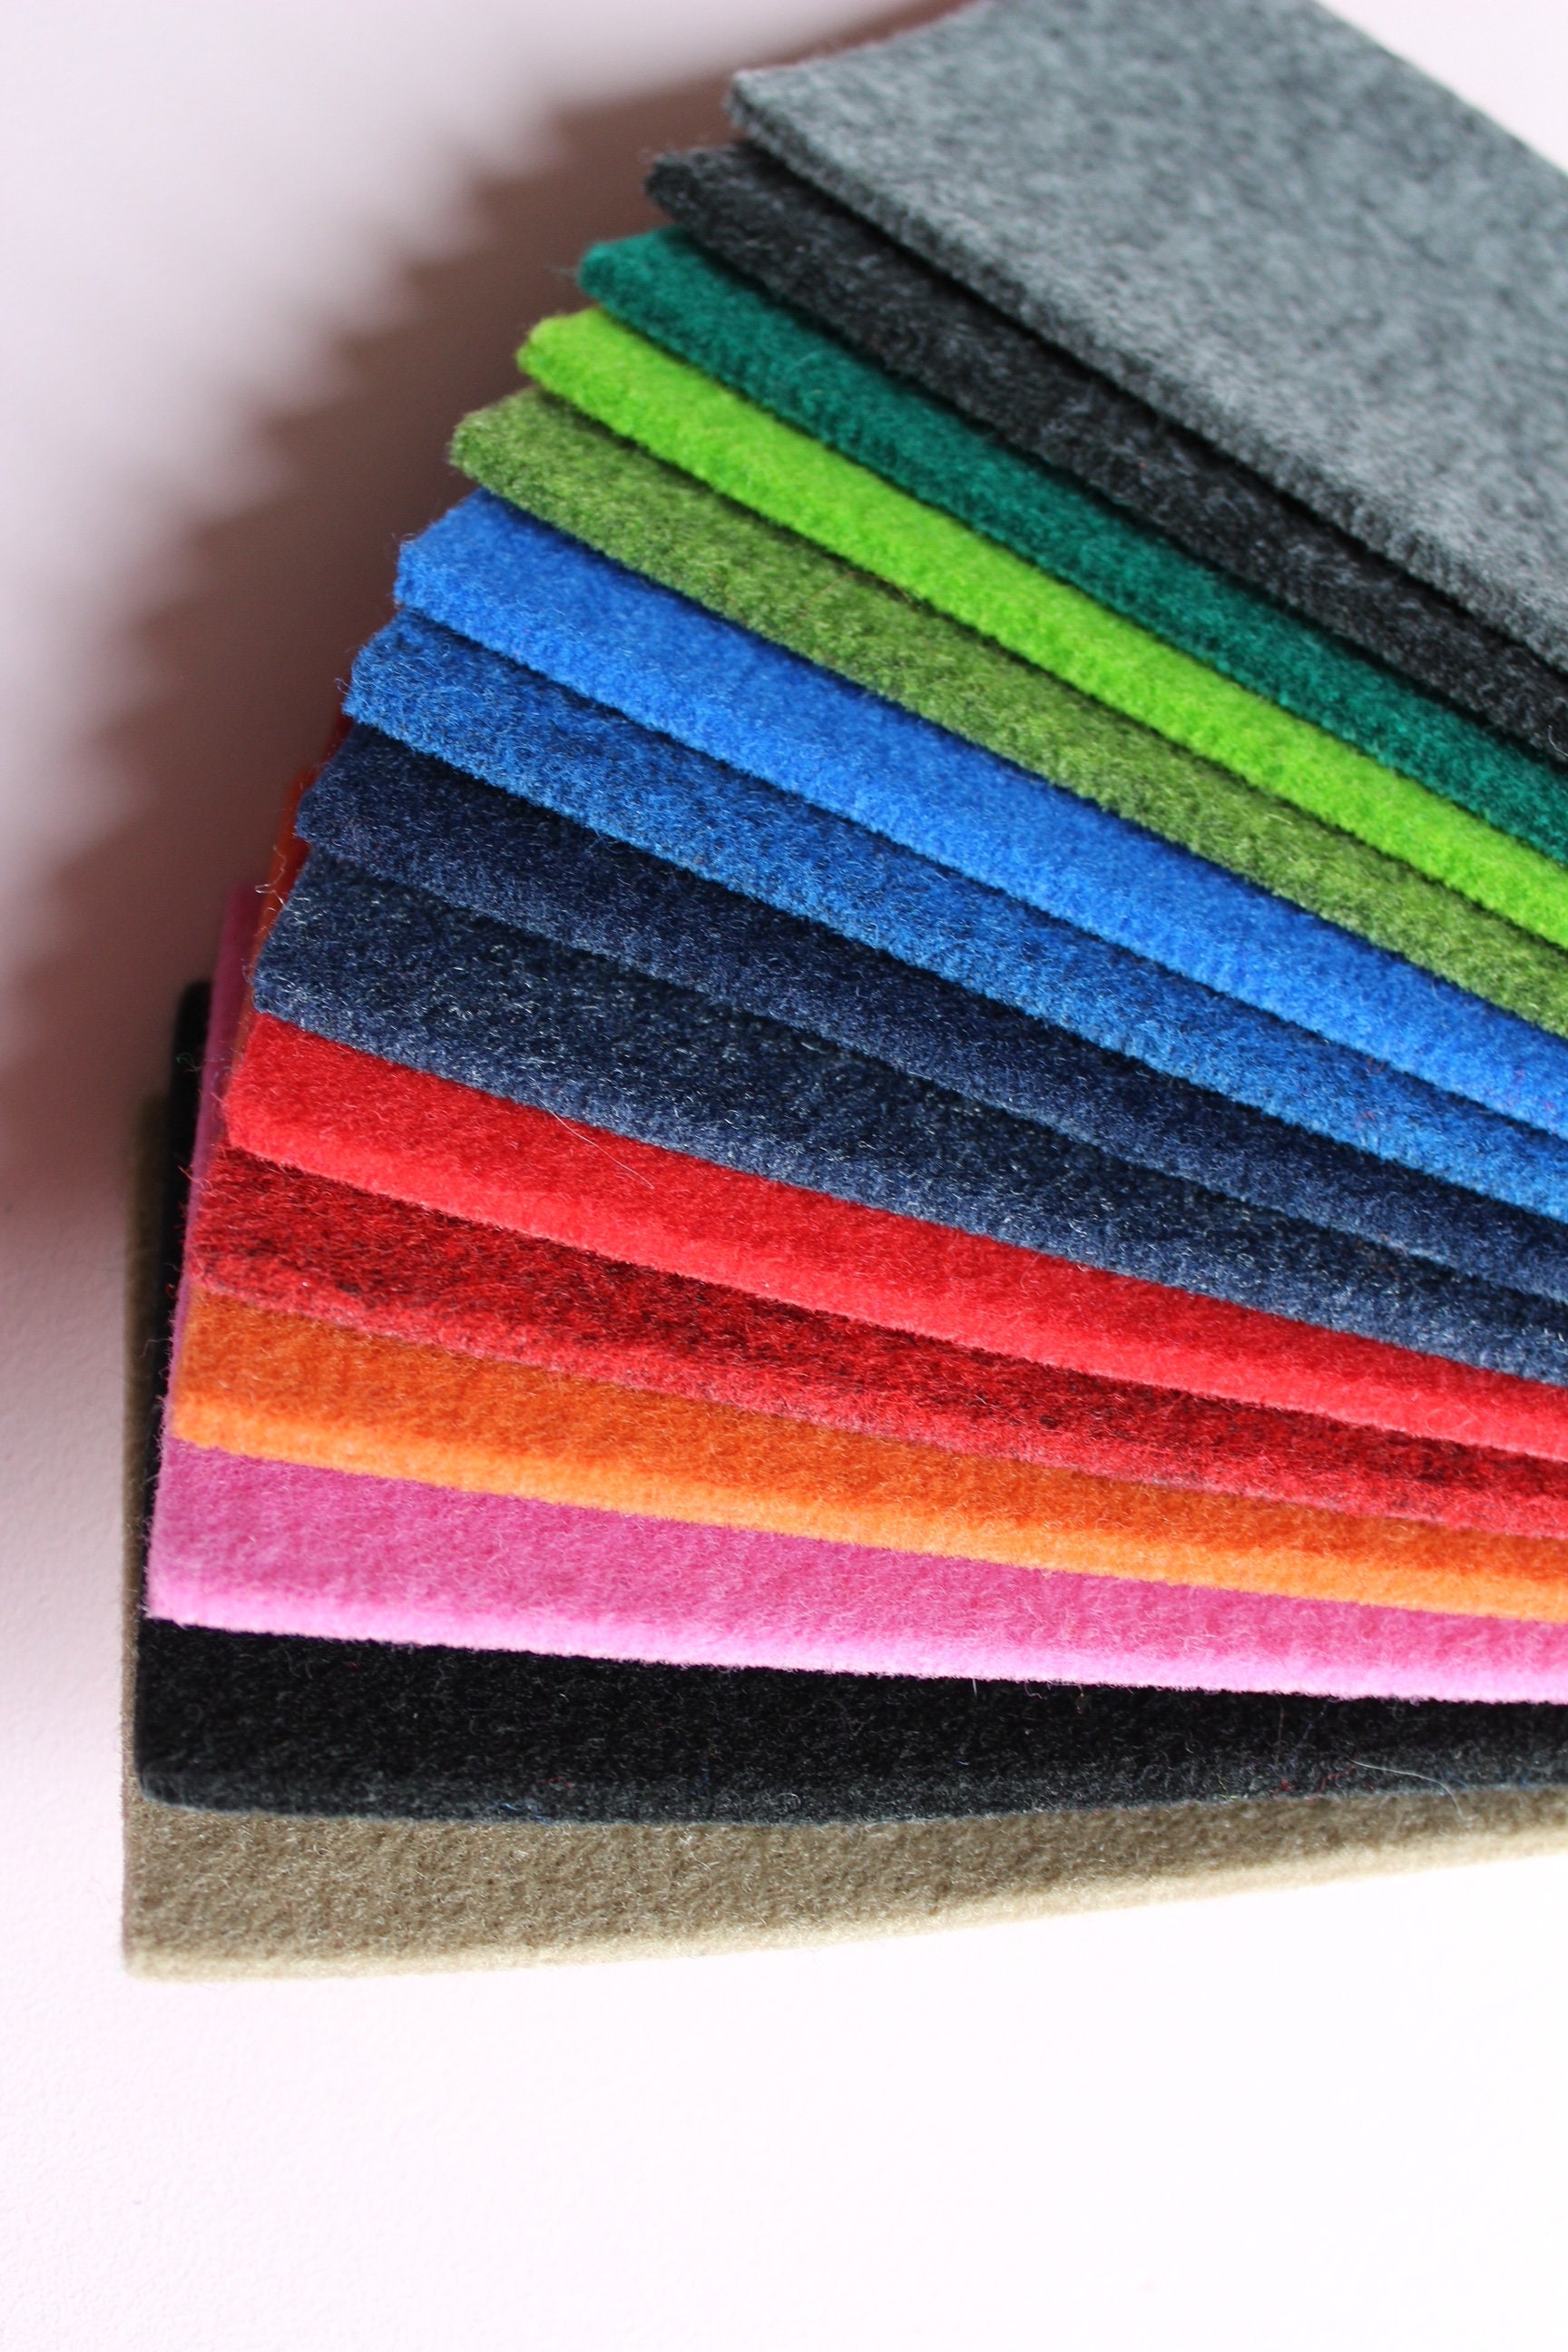 stiffen Quick Fabric Stiffener - 8oz stiffen Quik Fabric and Hat STIFFENER, Plus 25 Sewing Fabric Clips